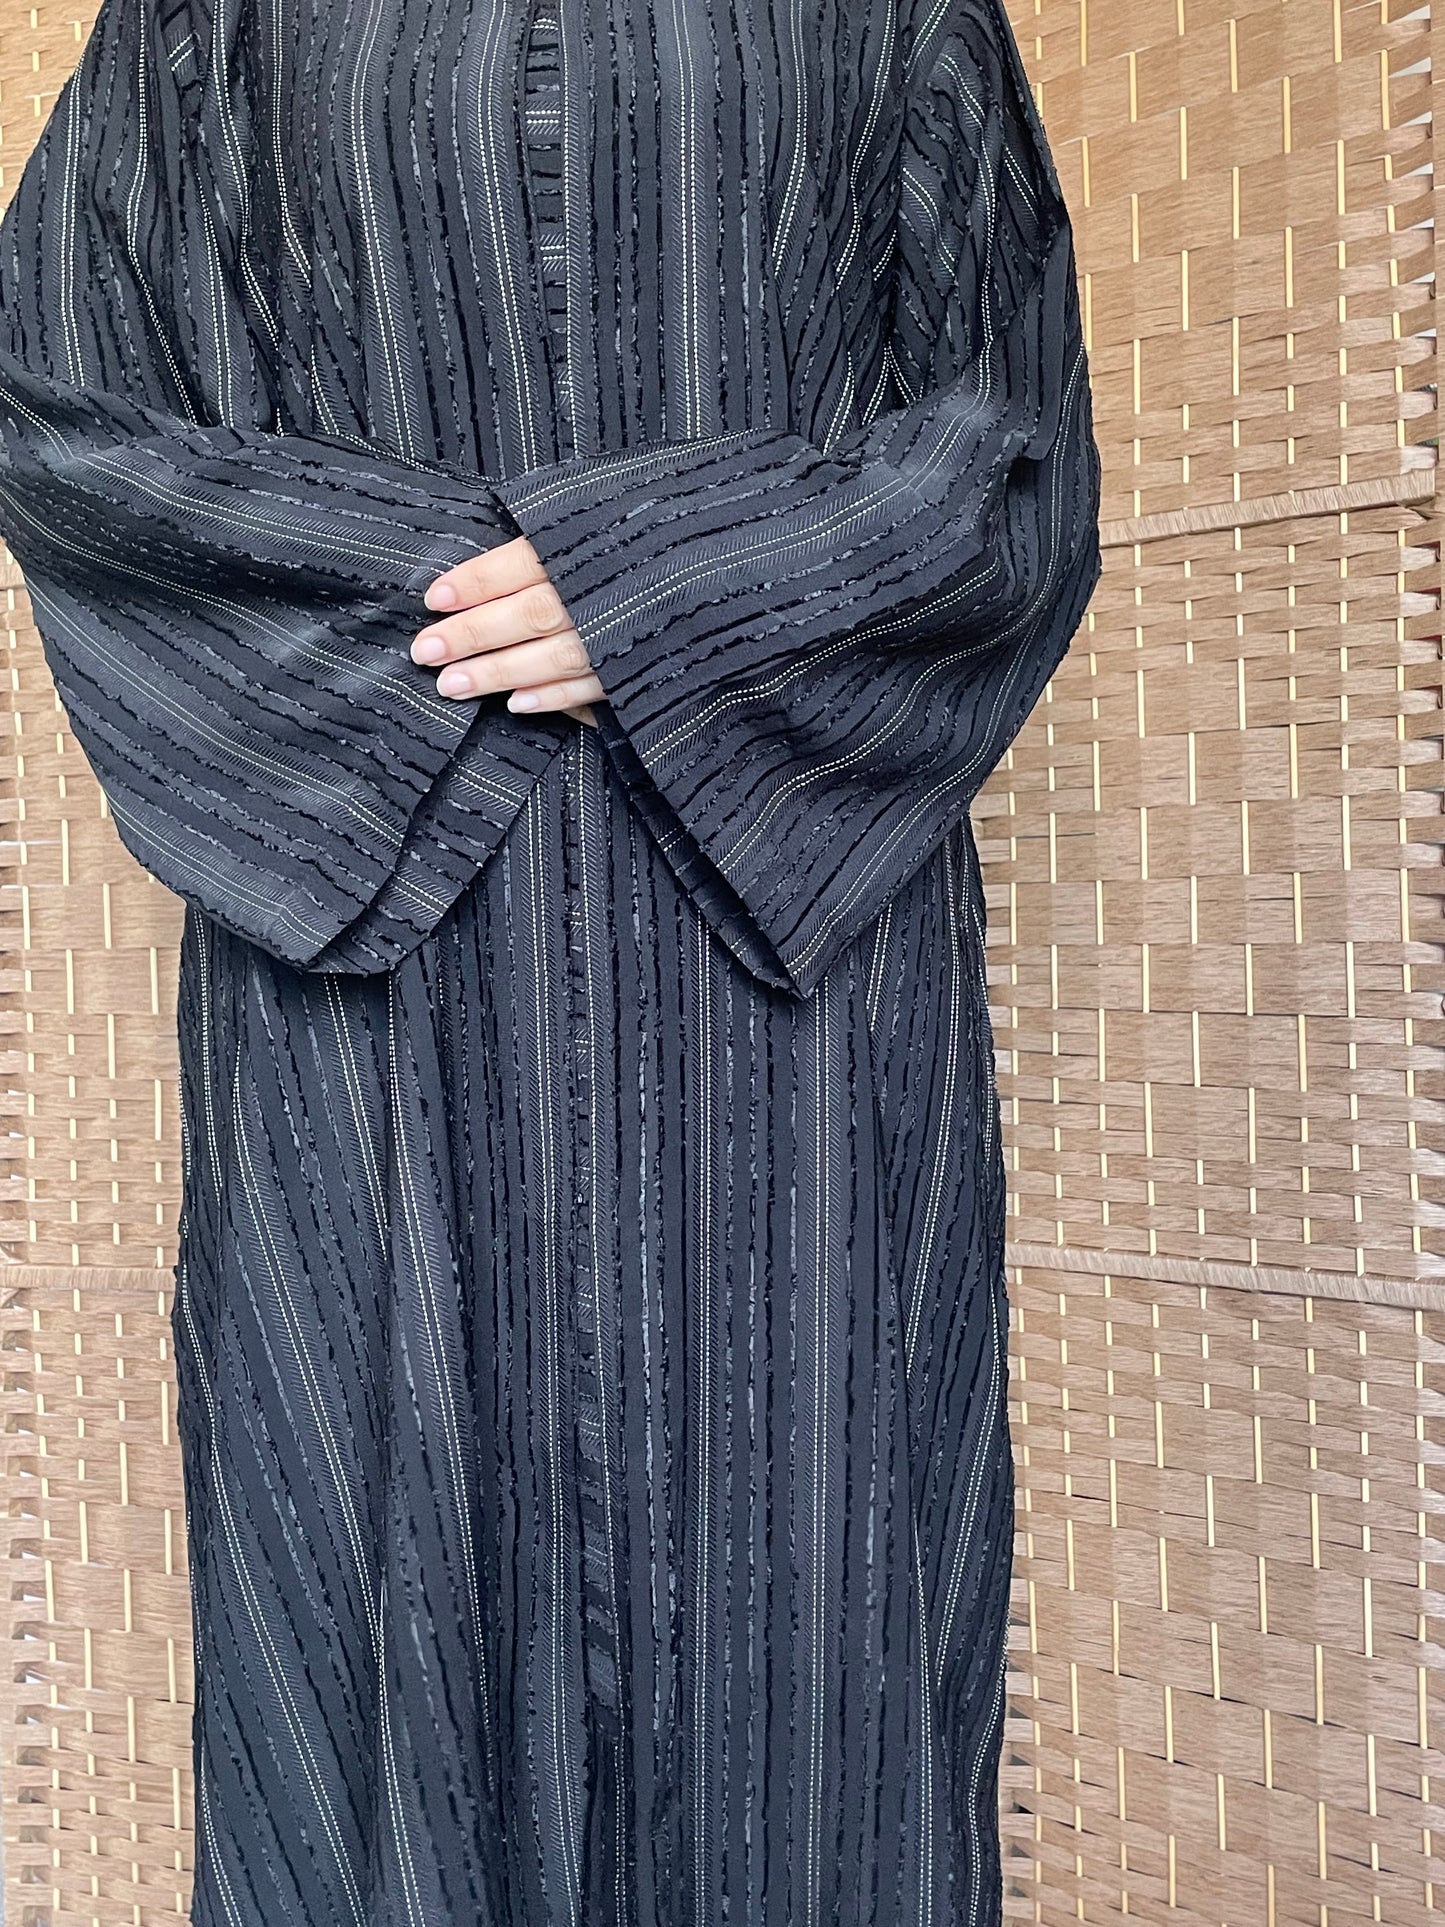 Hawa Abaya - Black Open abaya with buttons and matching scarf